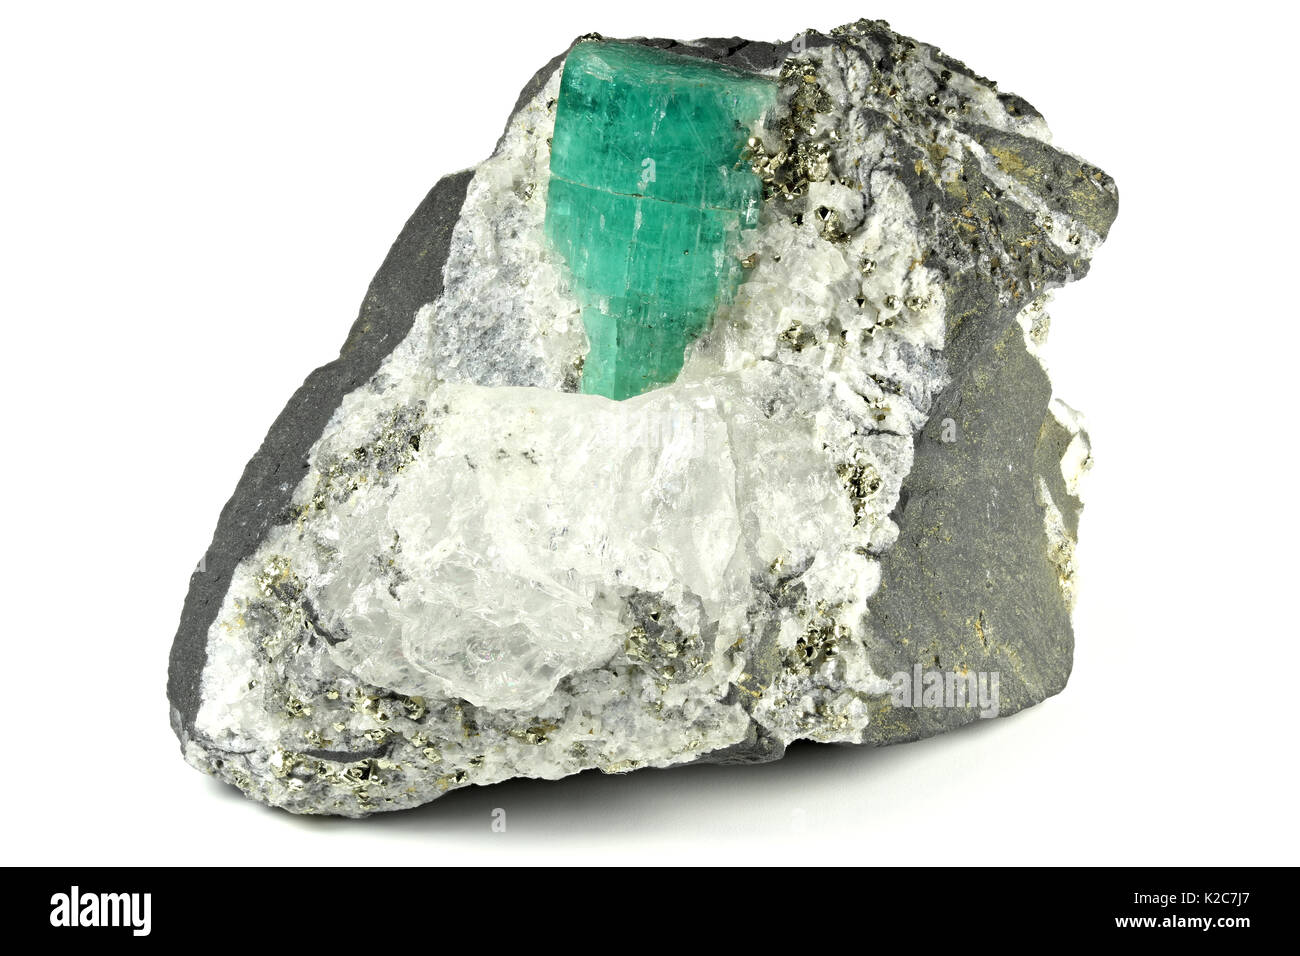 emerald nestled in bedrock found in Chivor/ Colombia Stock Photo